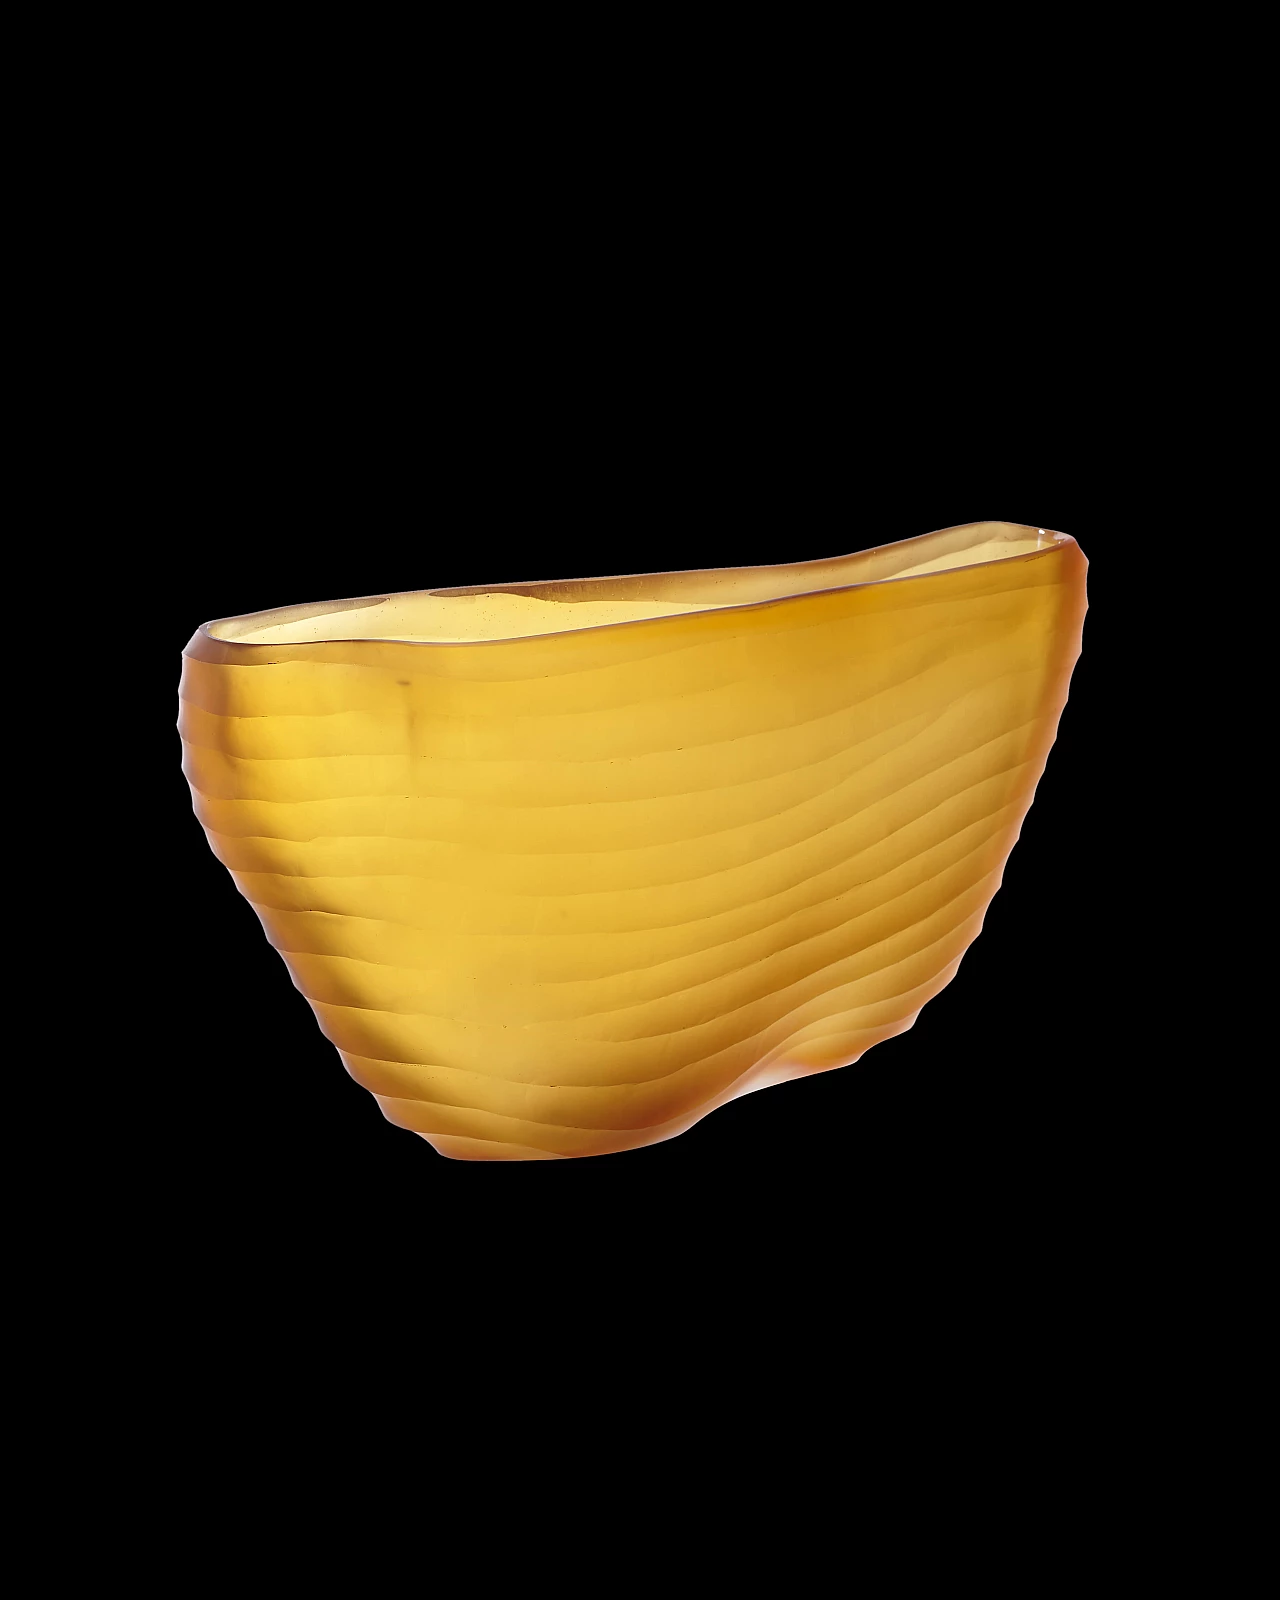 Beveled Murano glass vase by Micheluzzi 1249951